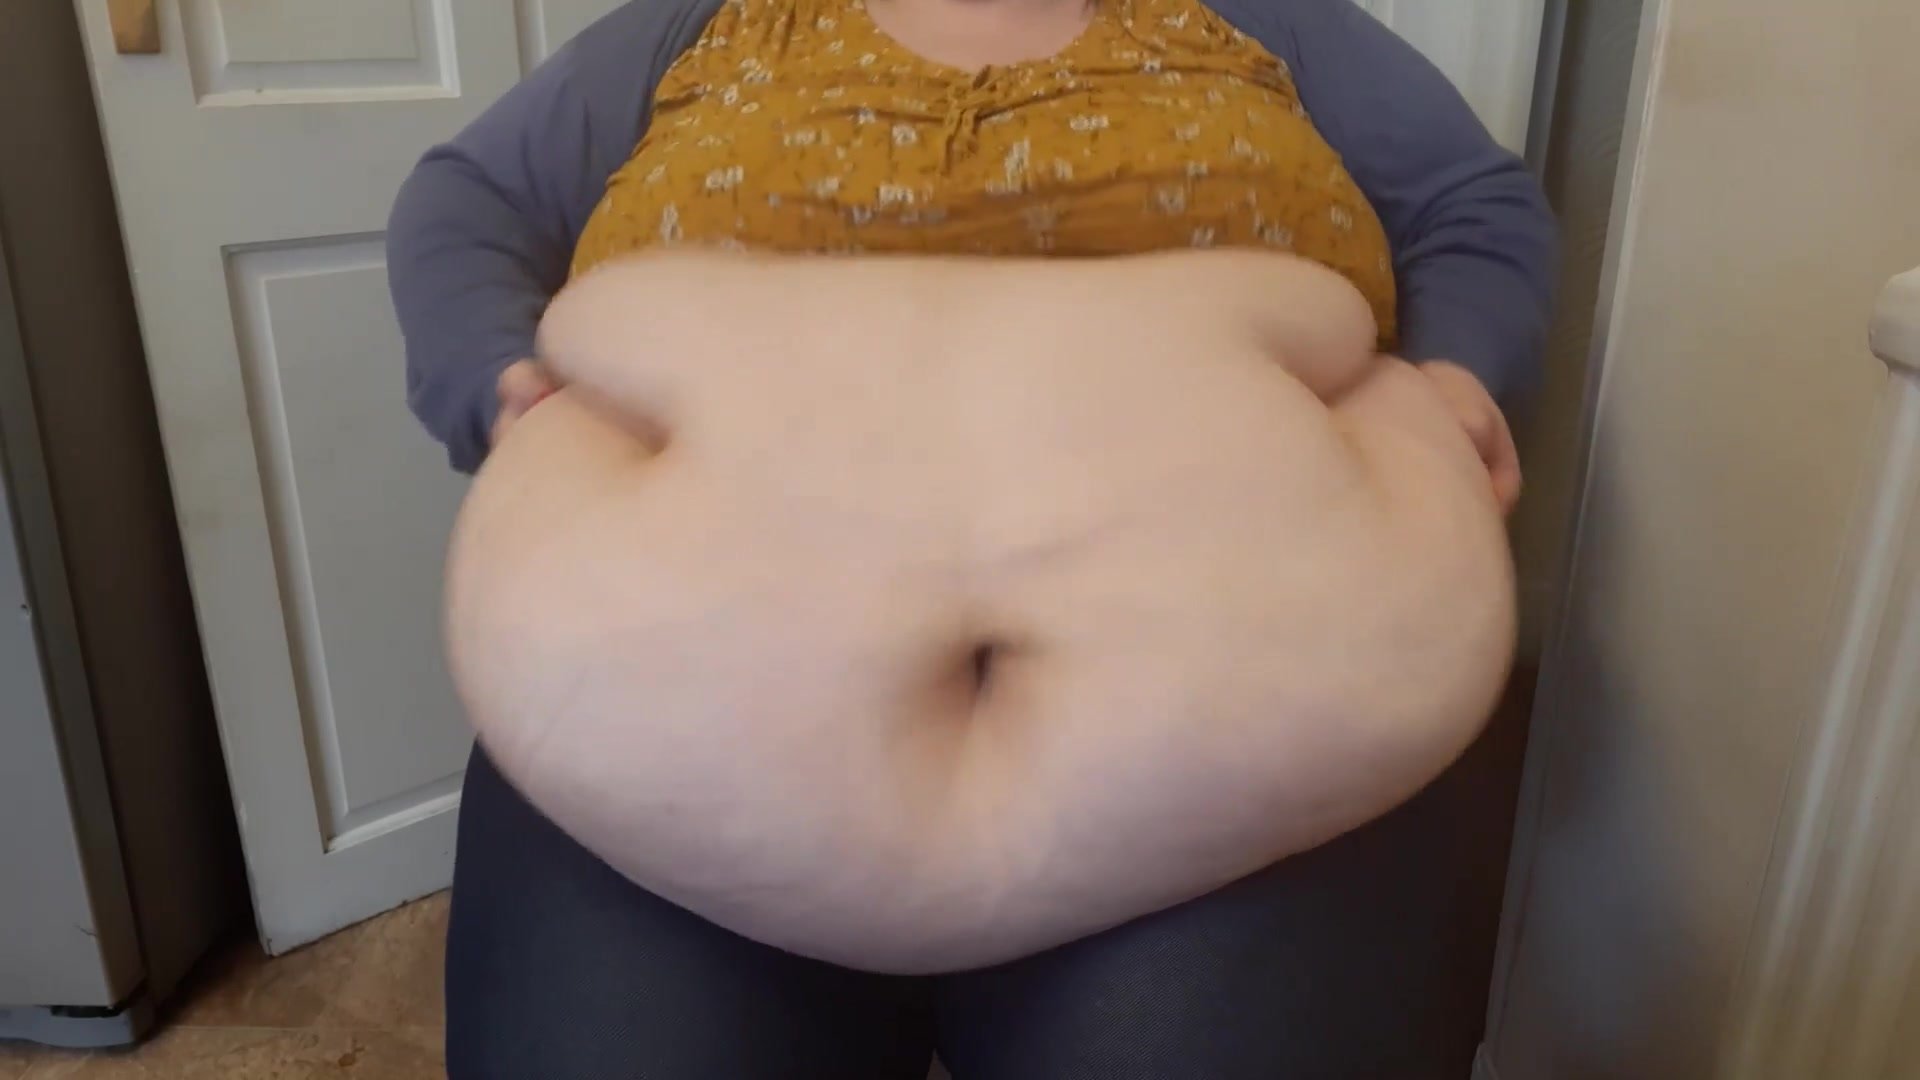 SSBBW shows her huge belly